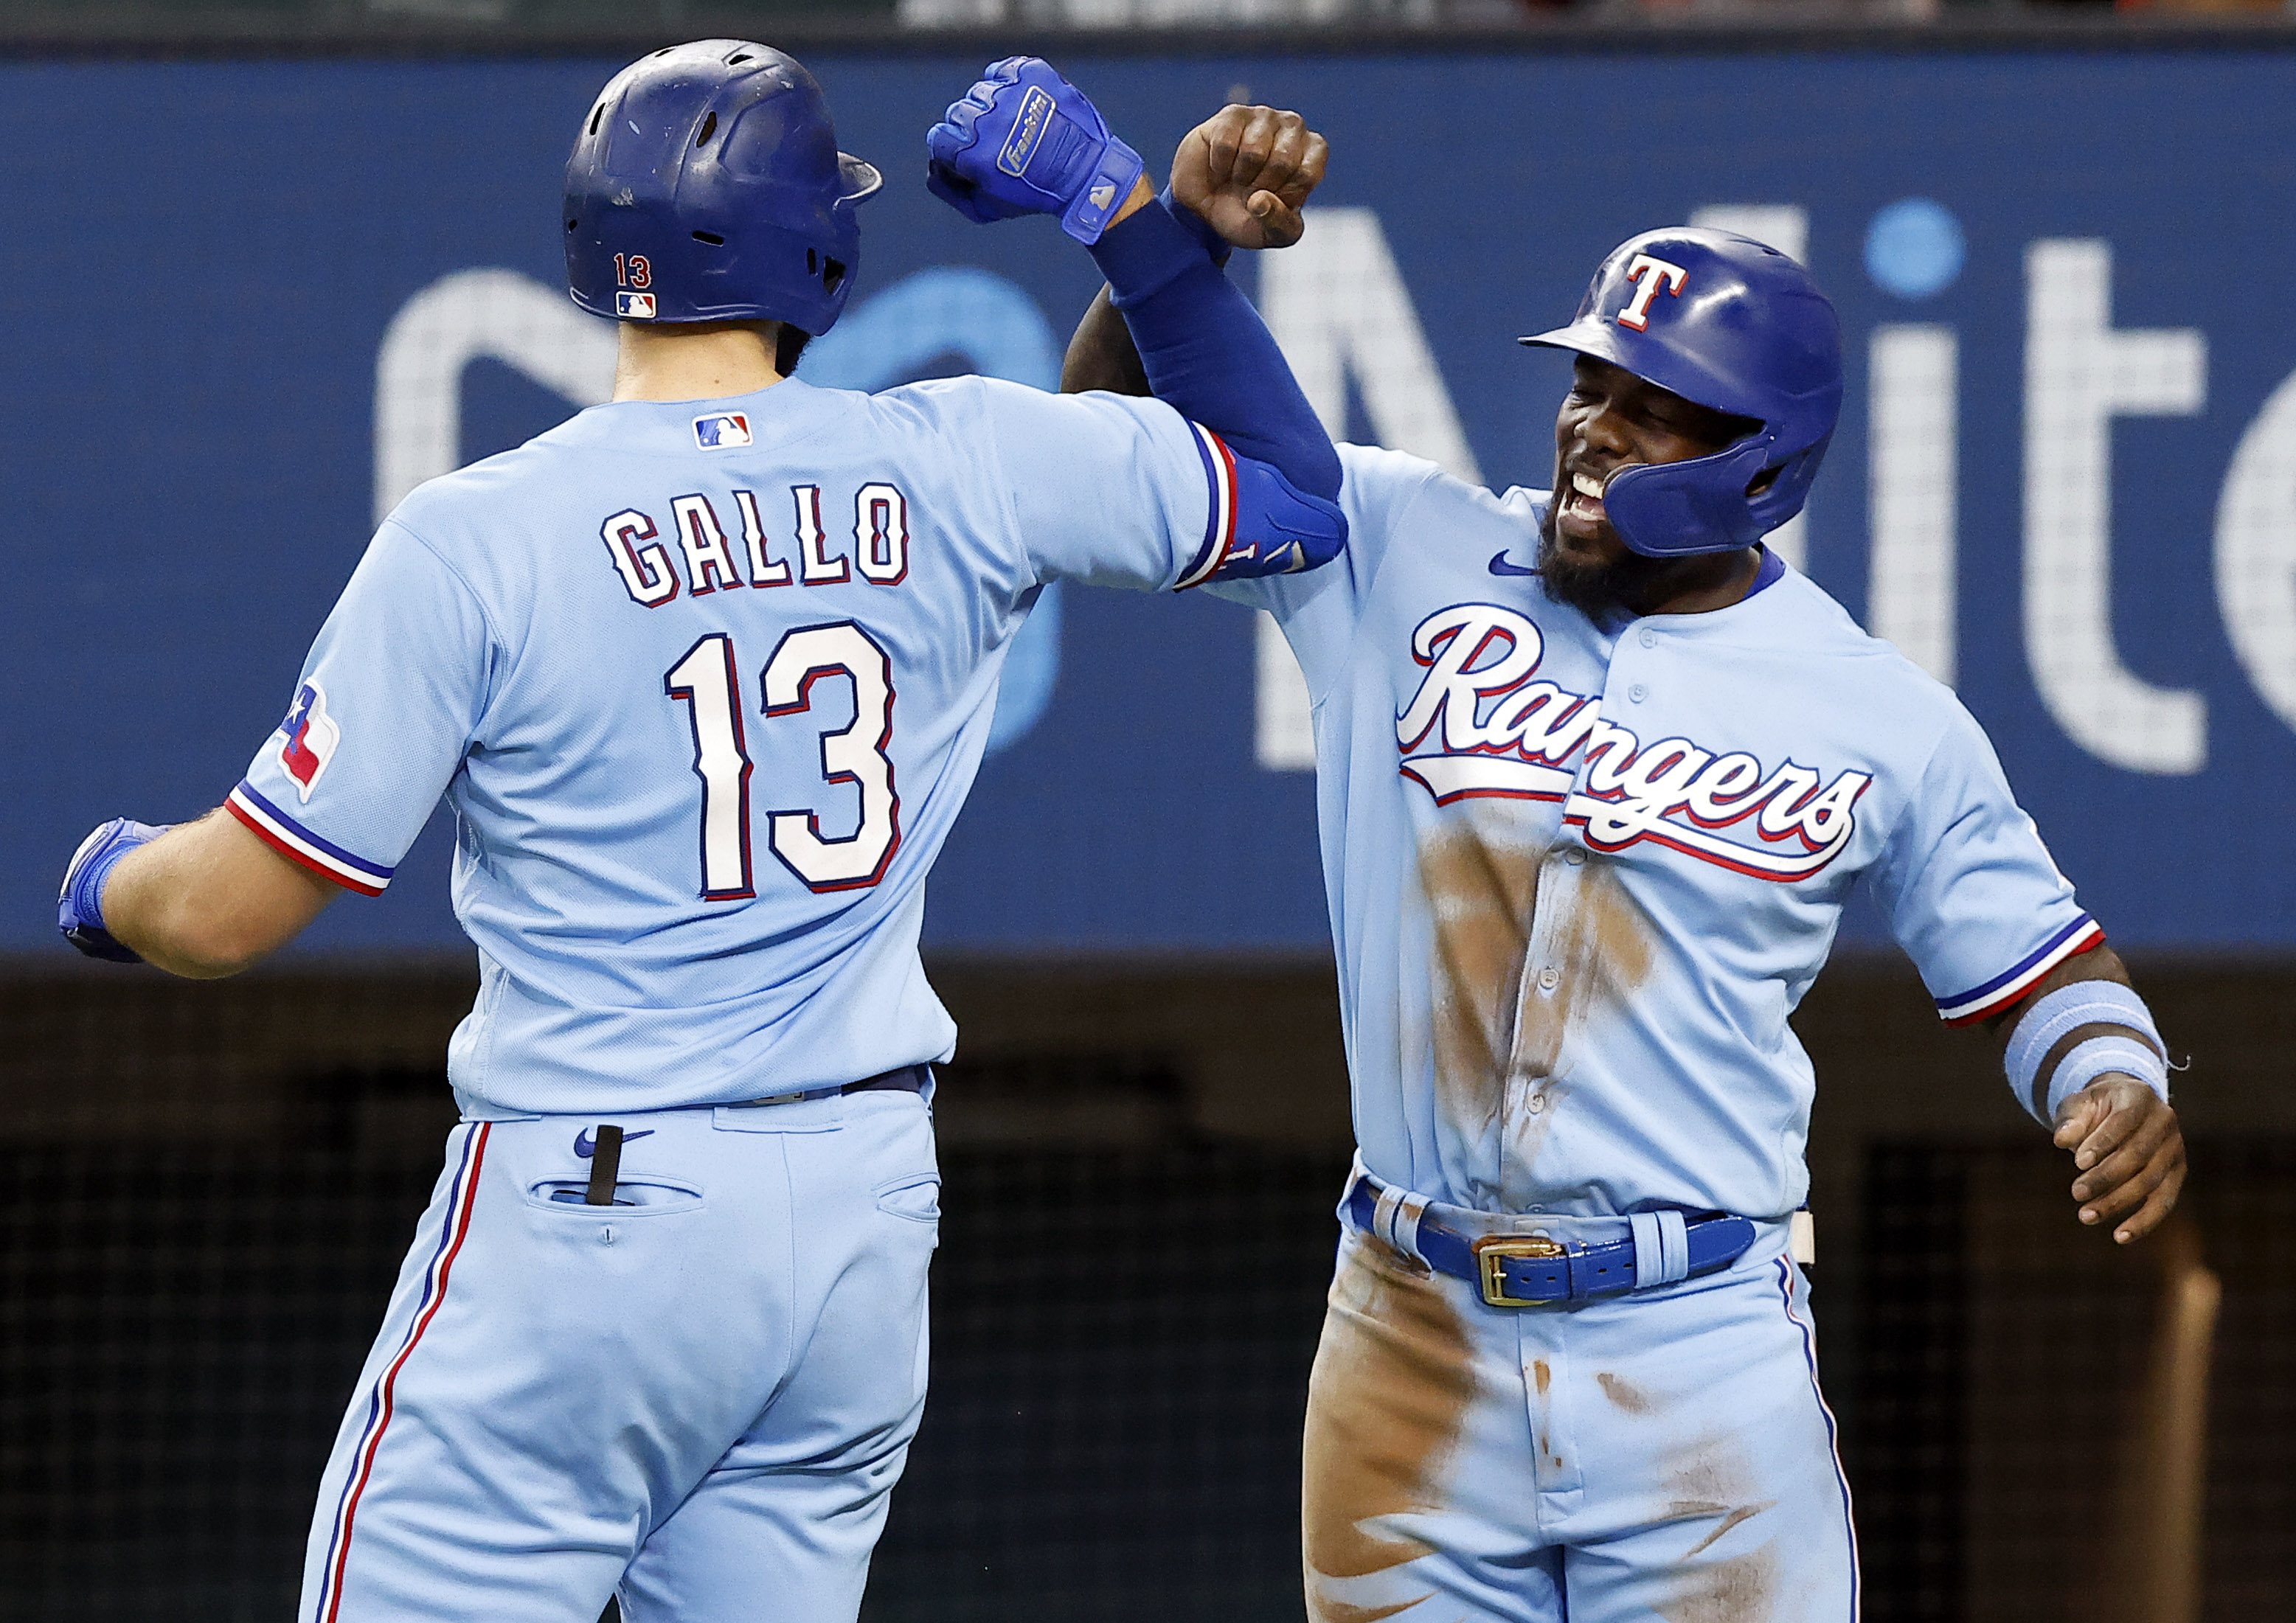 MLB on FOX - The Texas Rangers revealed their new uniforms